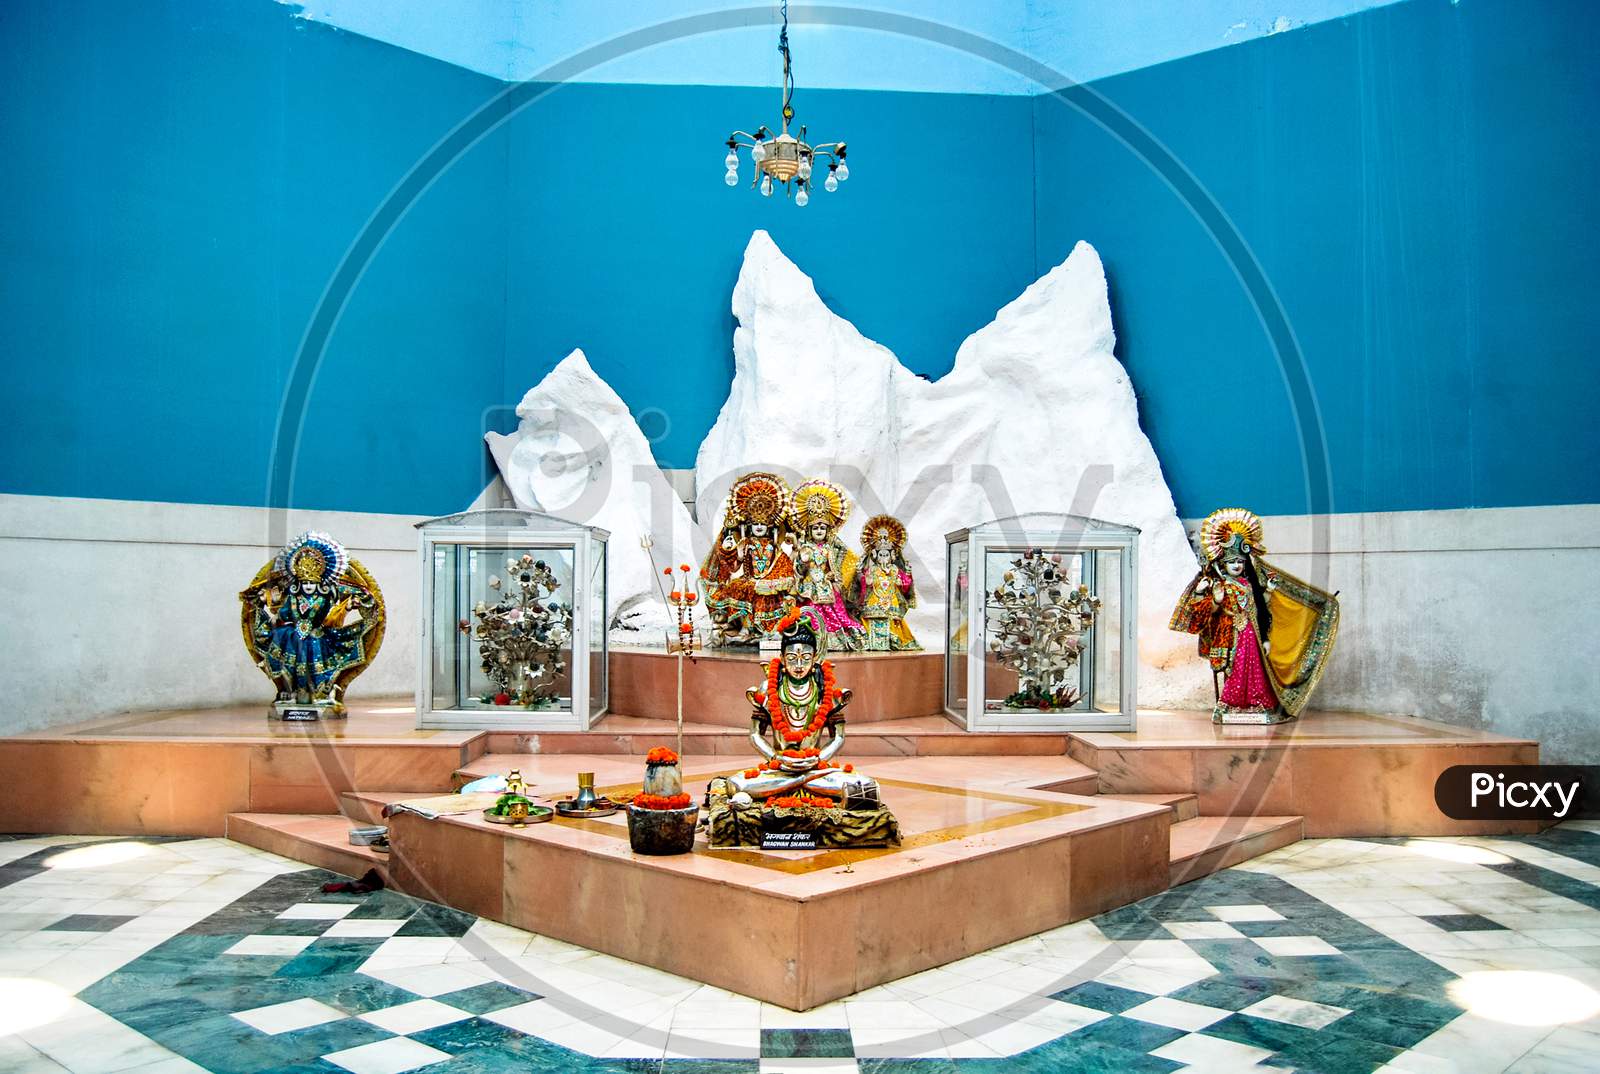 Idols Of Deities Inside The Hindu Temple In India